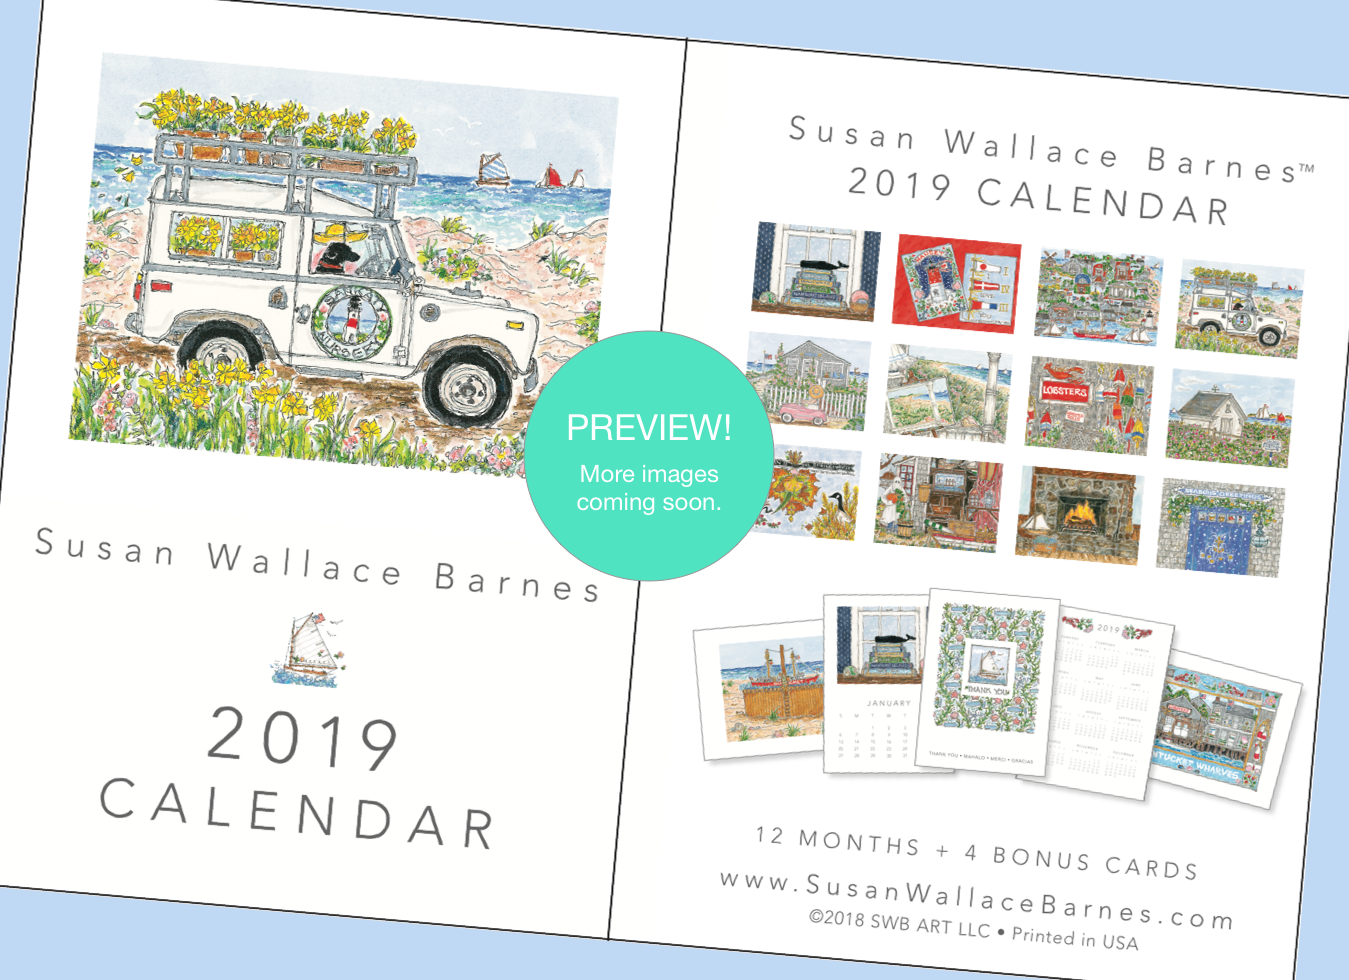 * 2019 * - 5 x 7 Susan Wallace Barnes 2019 Calendar